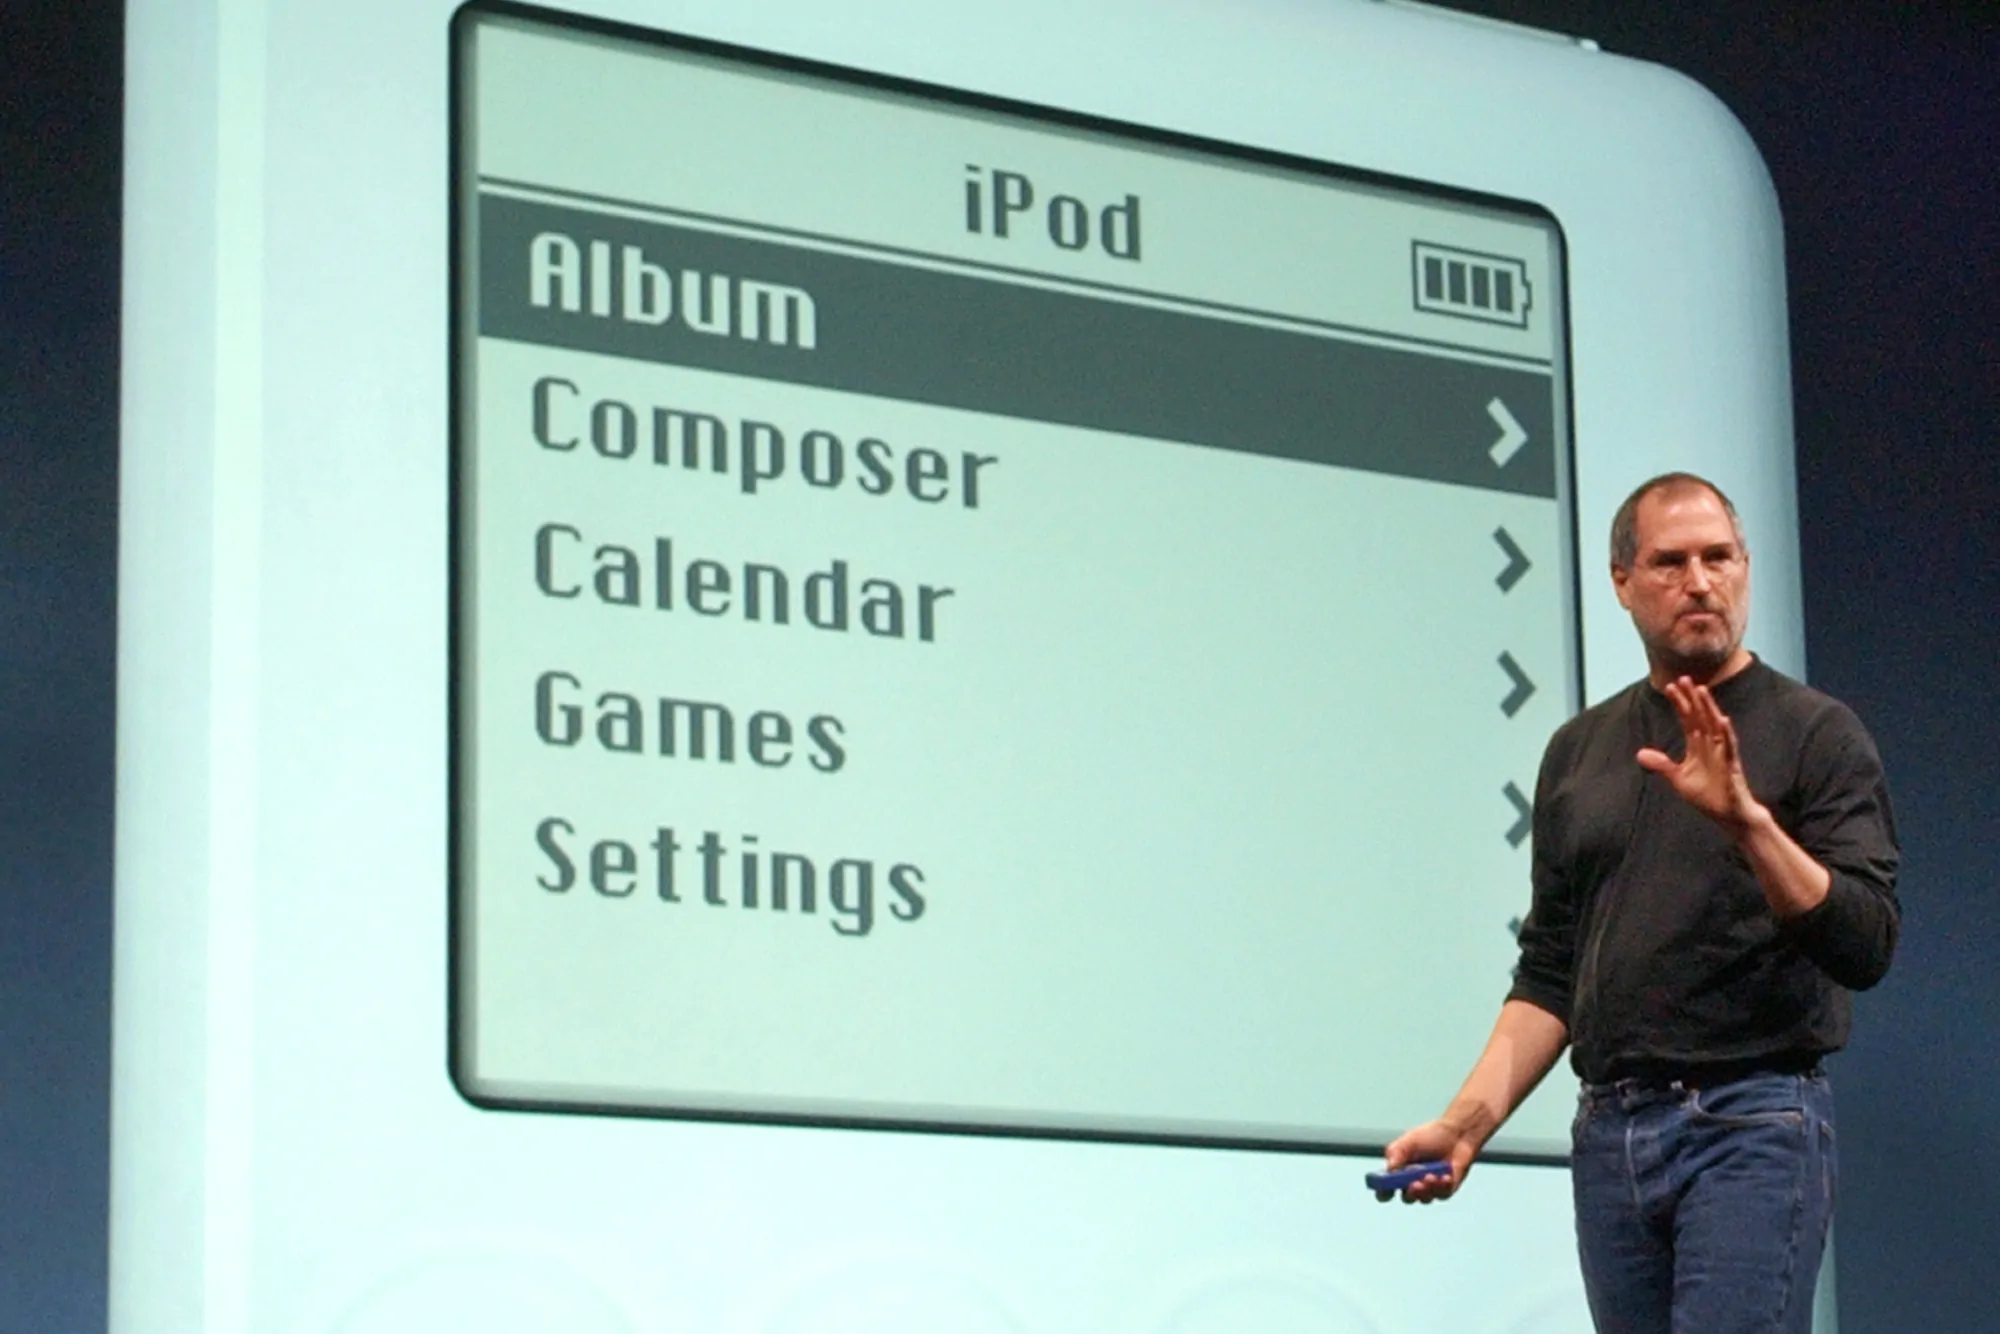 Steve Jobs announcing the original iPod.